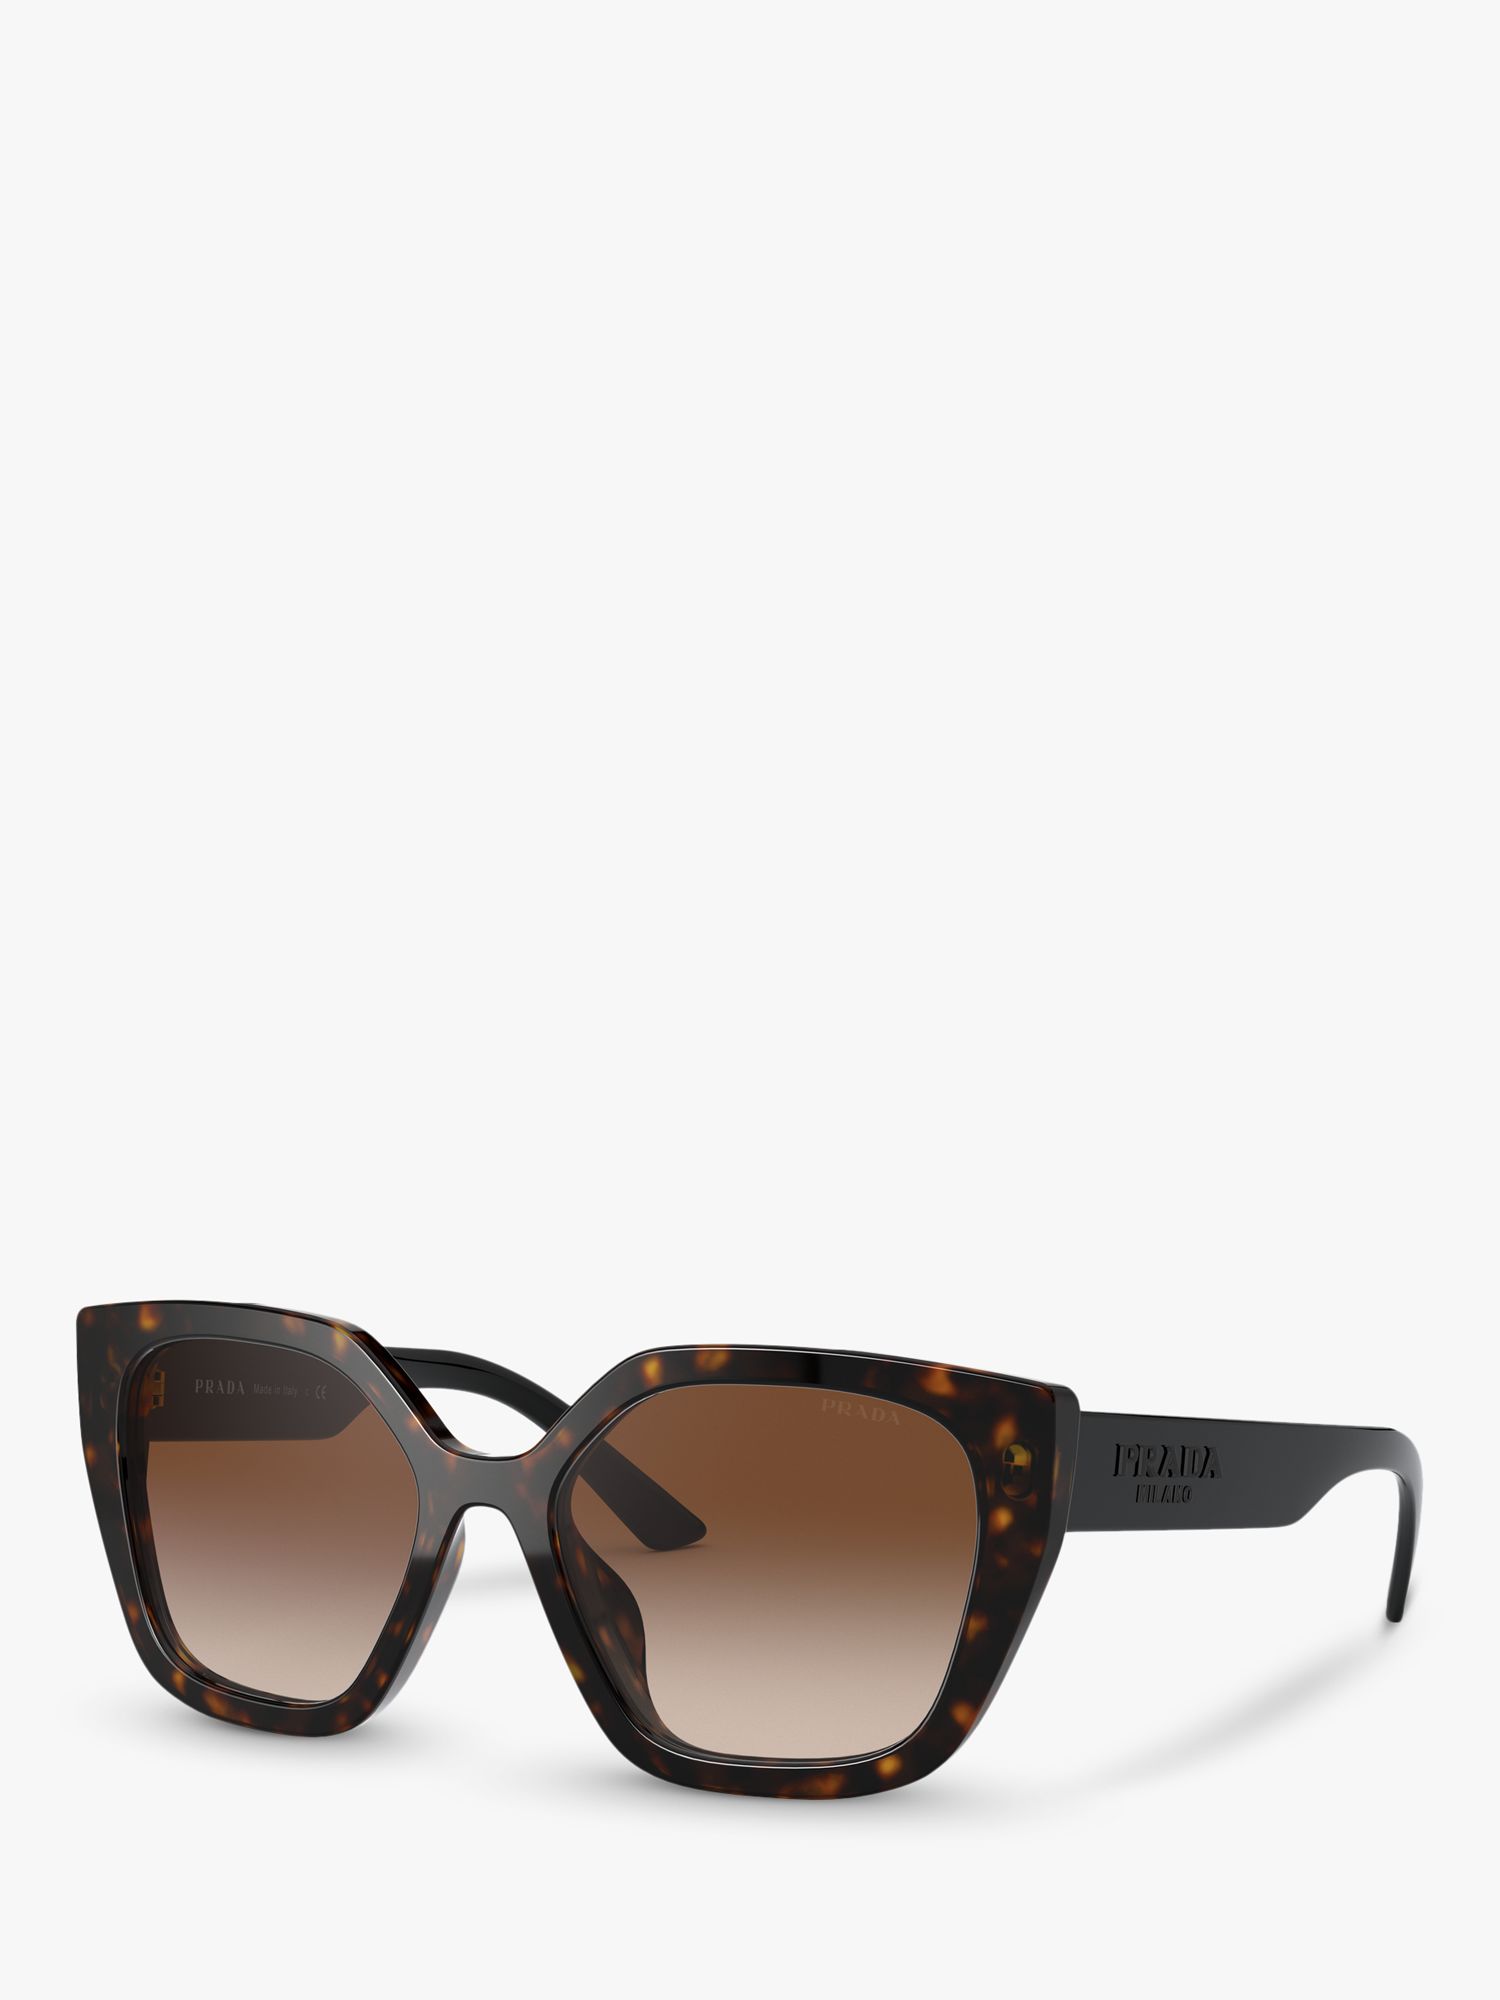 Prada PR 24XS Women's Square Sunglasses, Tortoiseshell/Brown Gradient at John Lewis & Partners